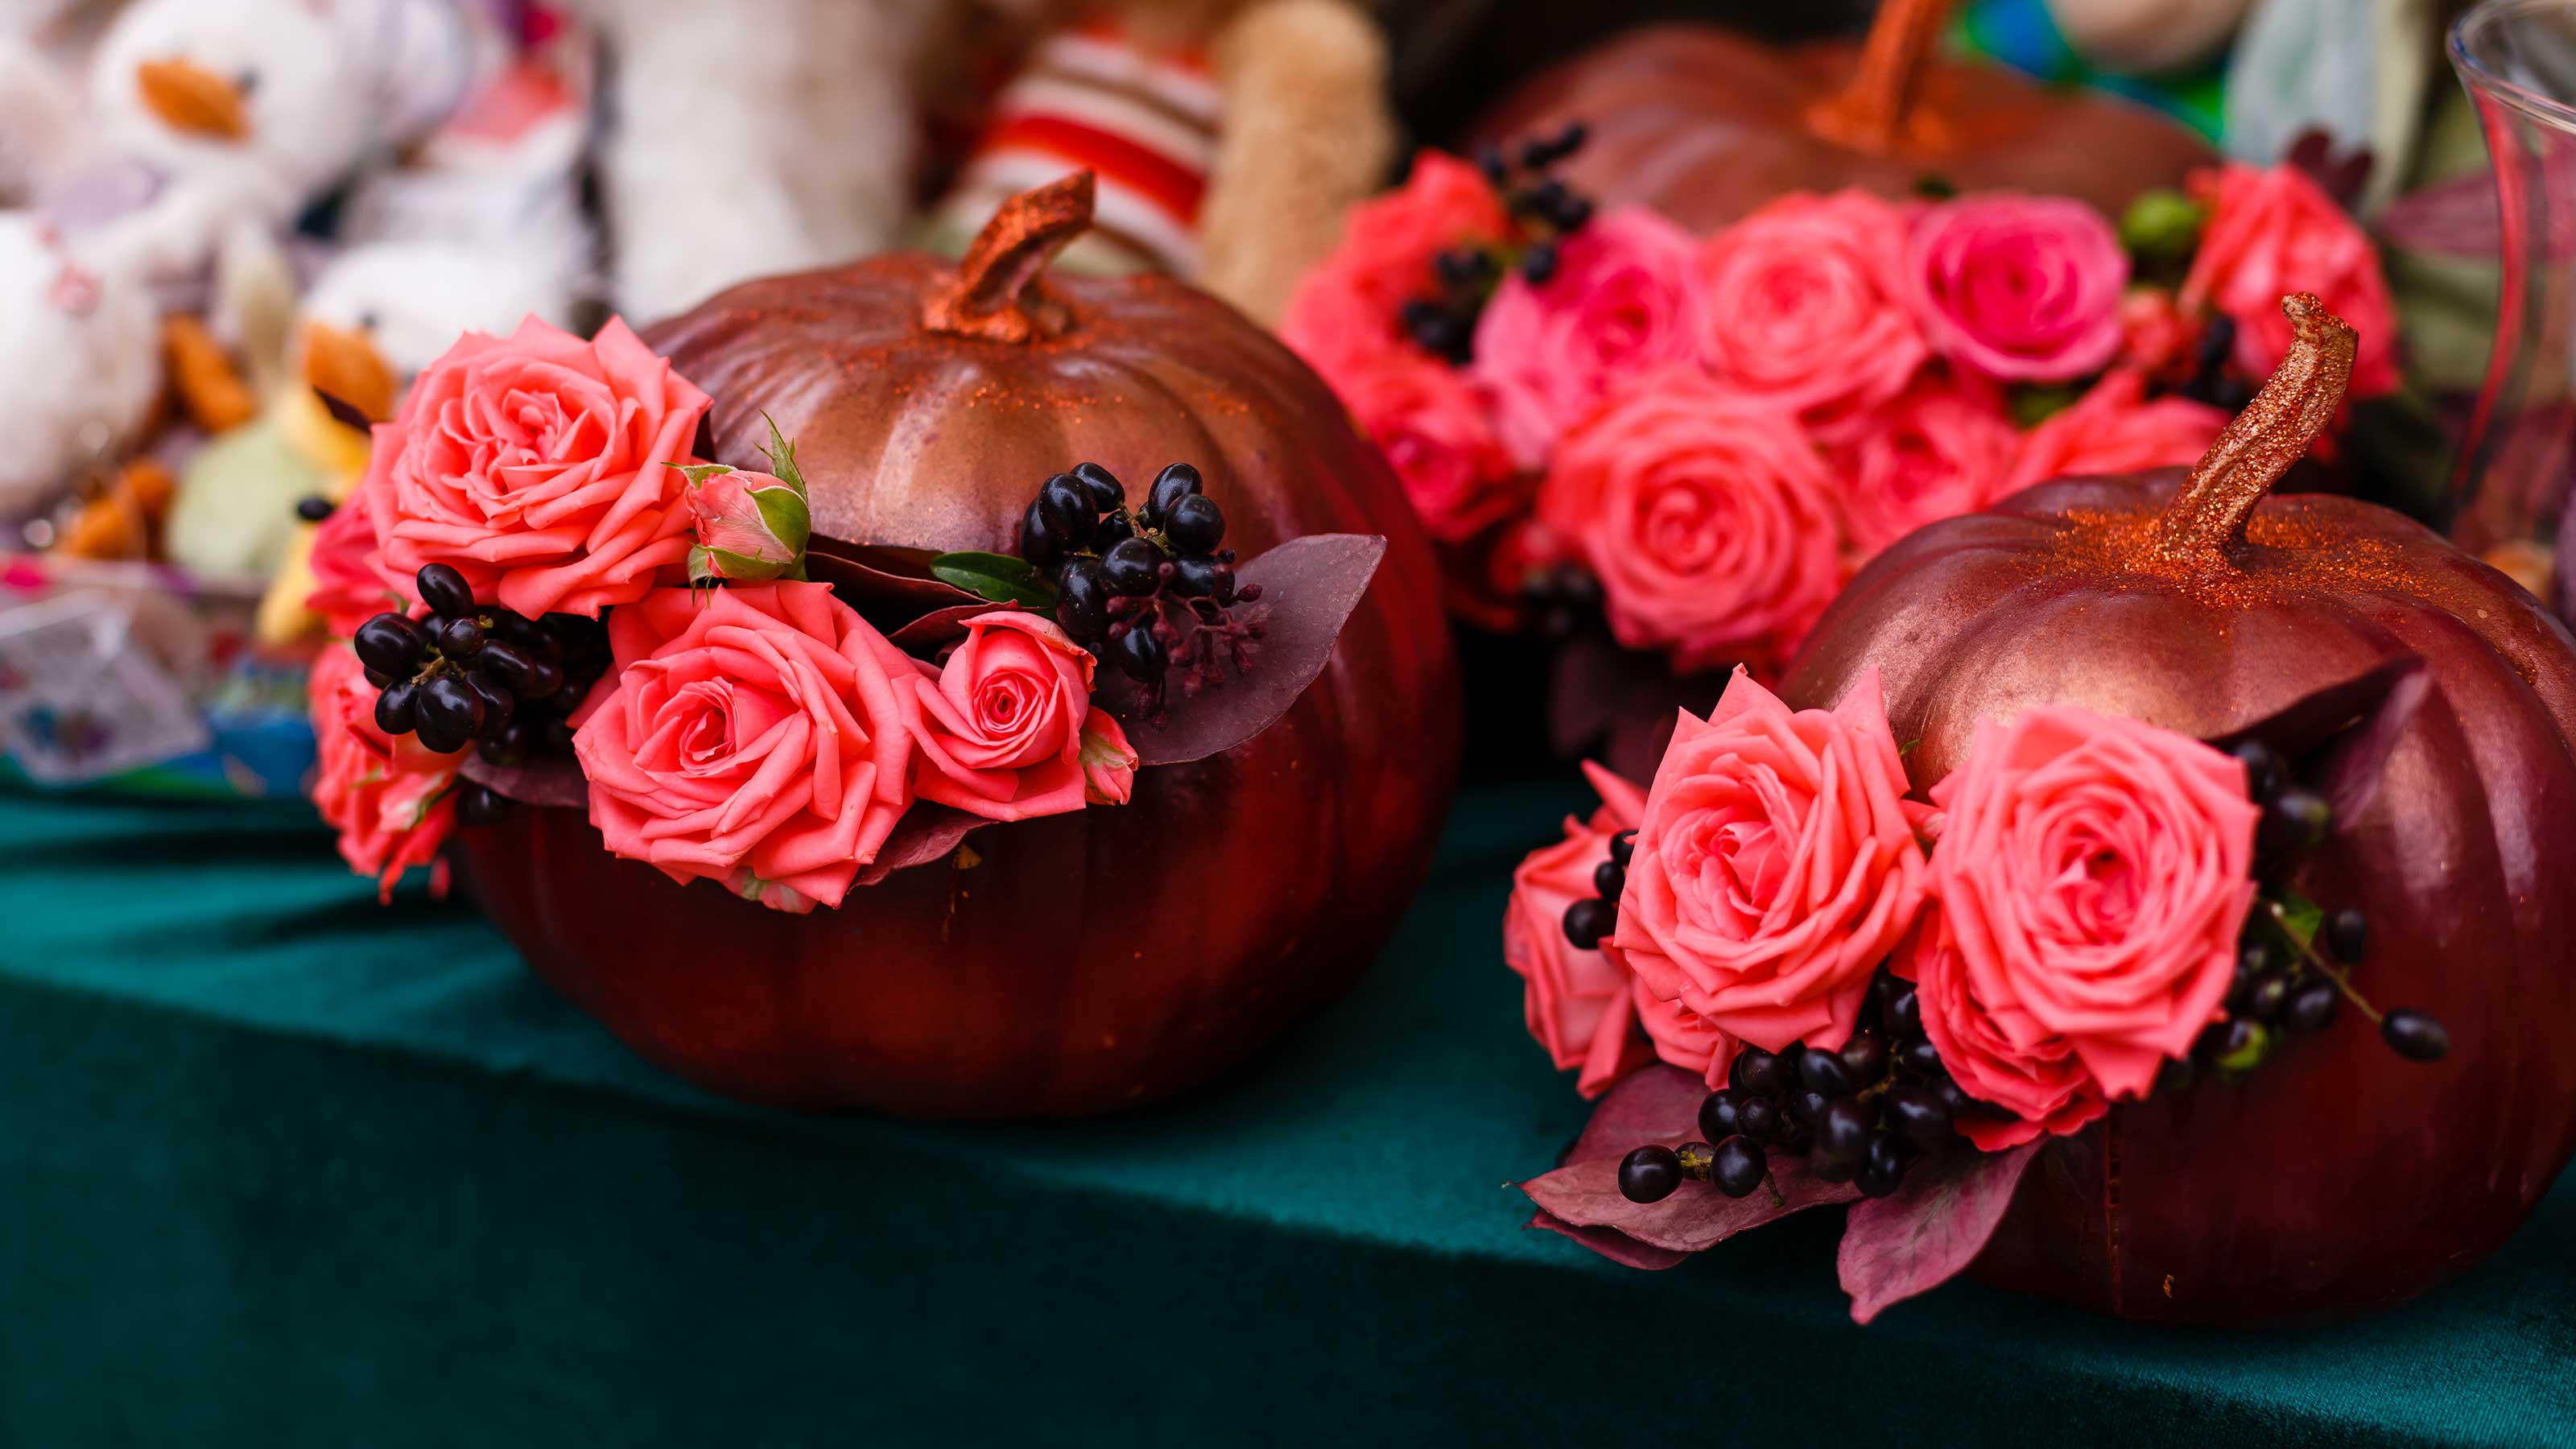 Pumpkin Centerpiece With Fresh Flowers